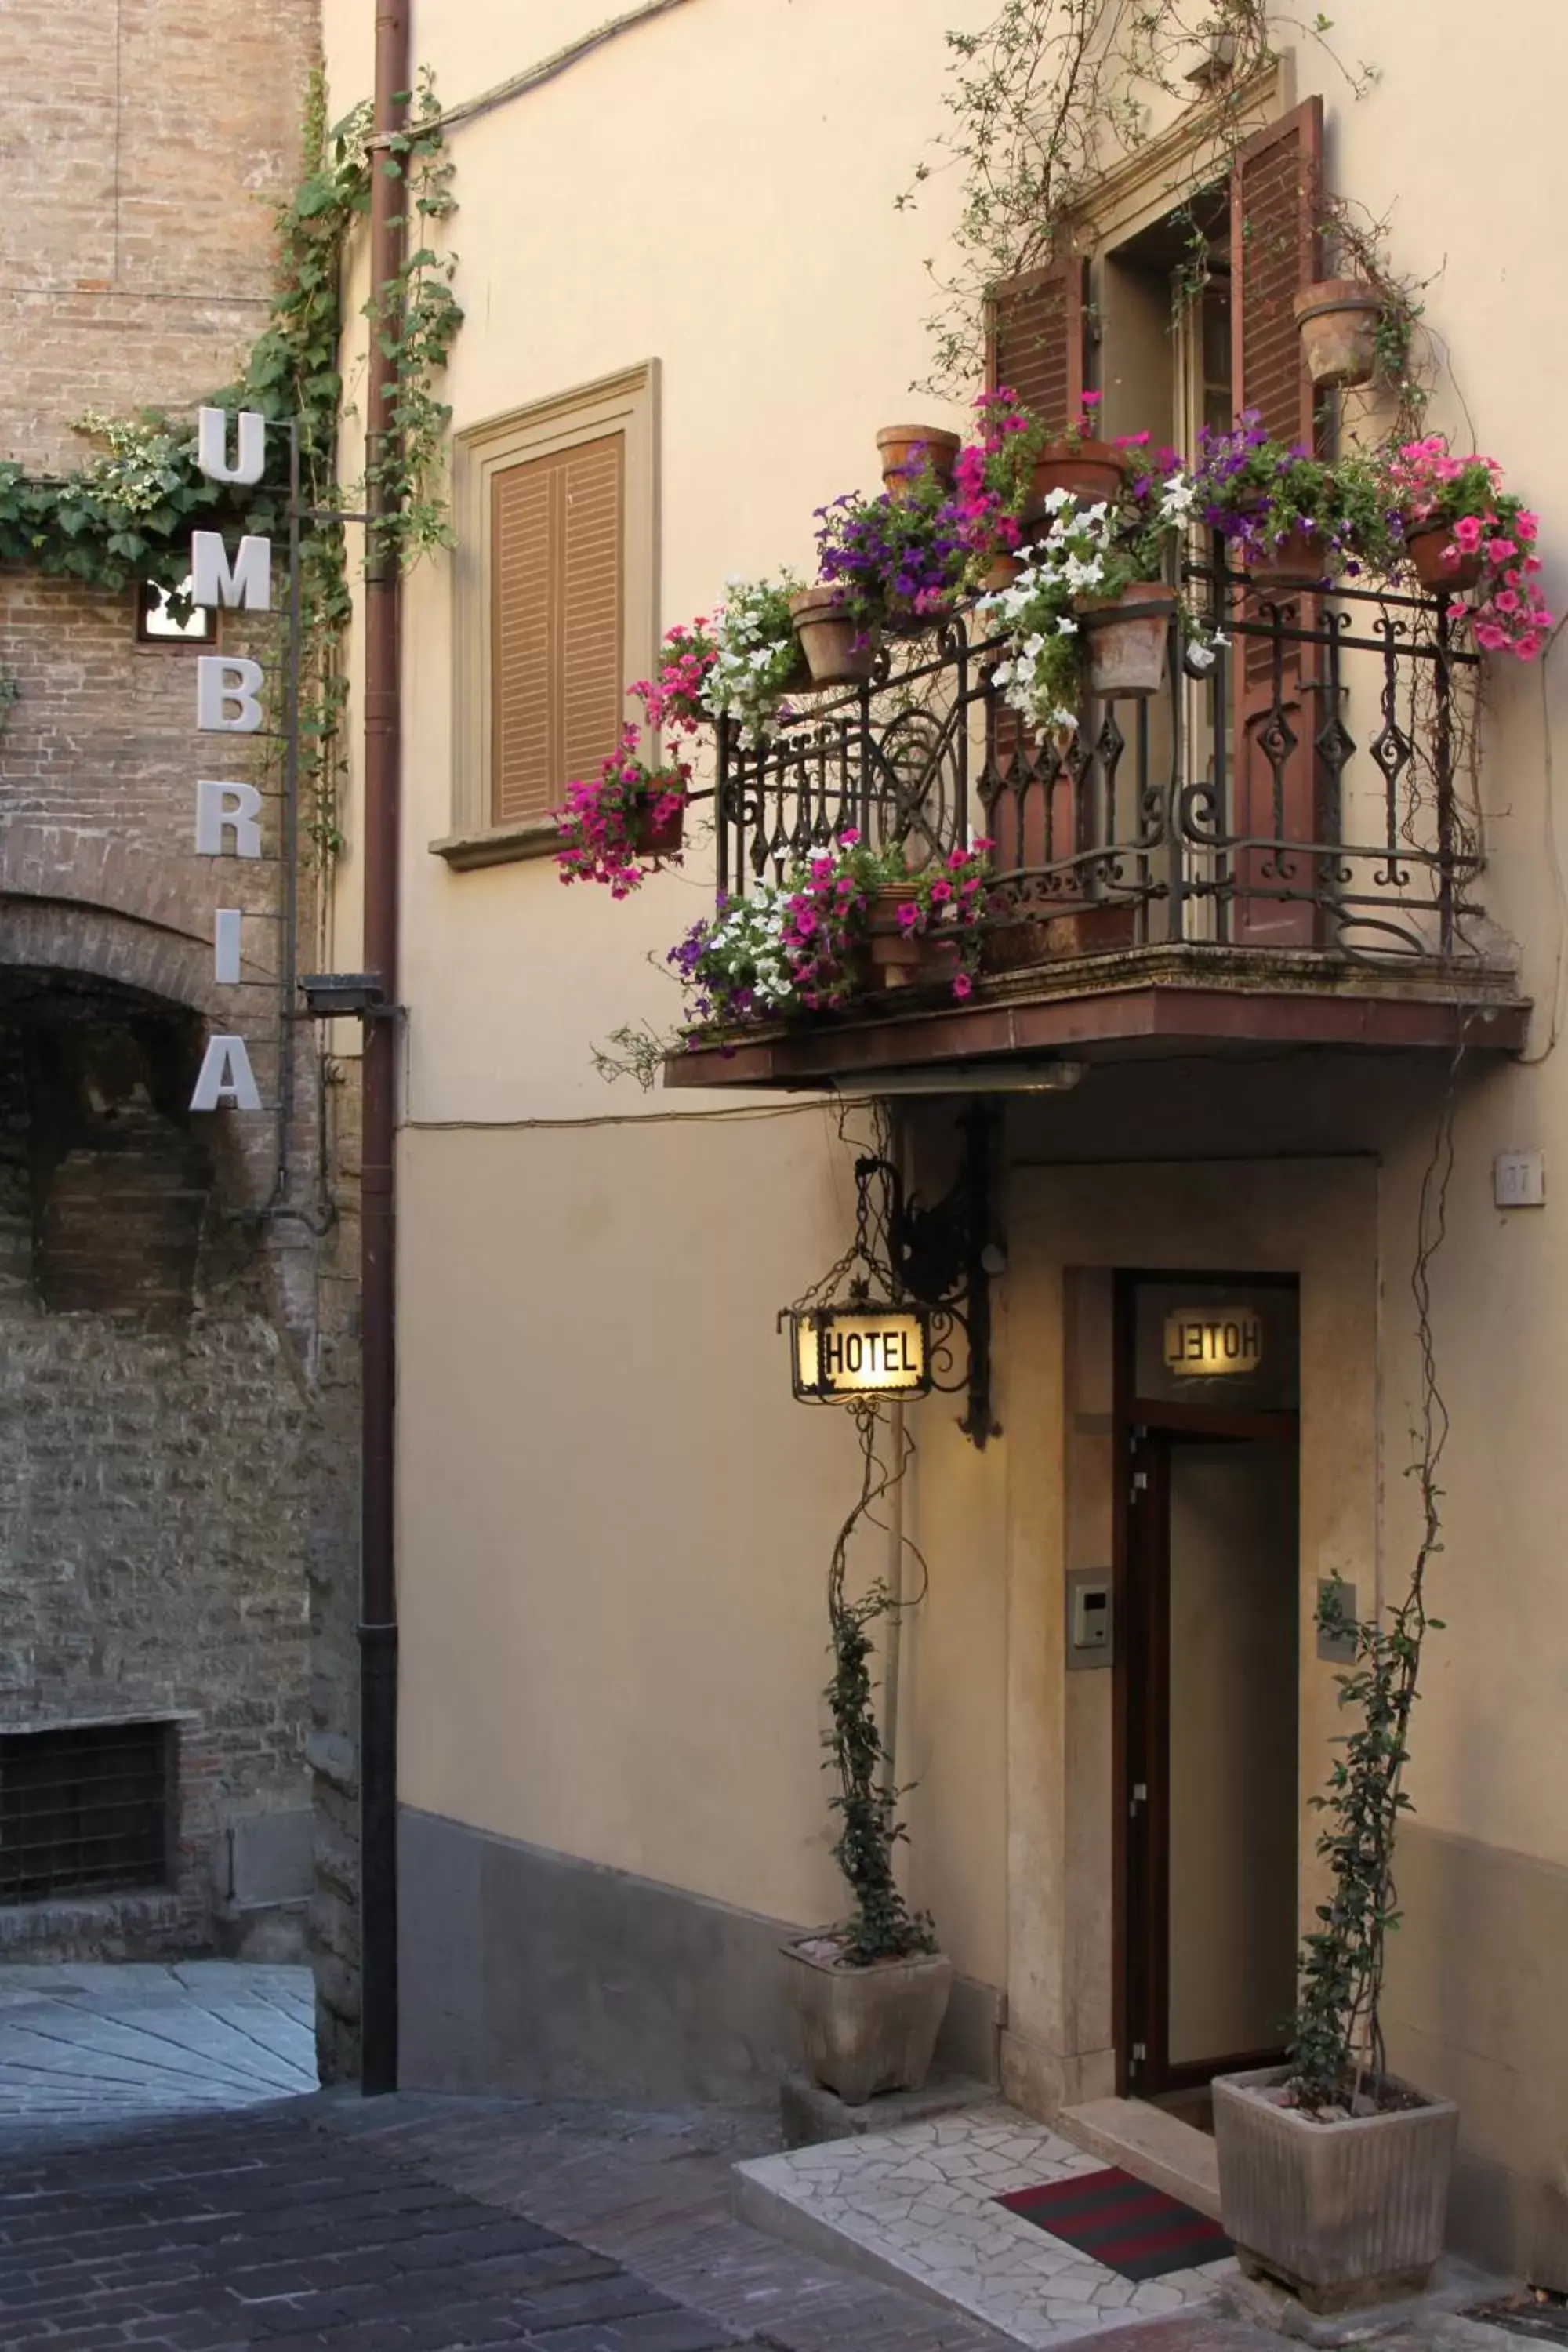 Facade/entrance in Hotel Umbria